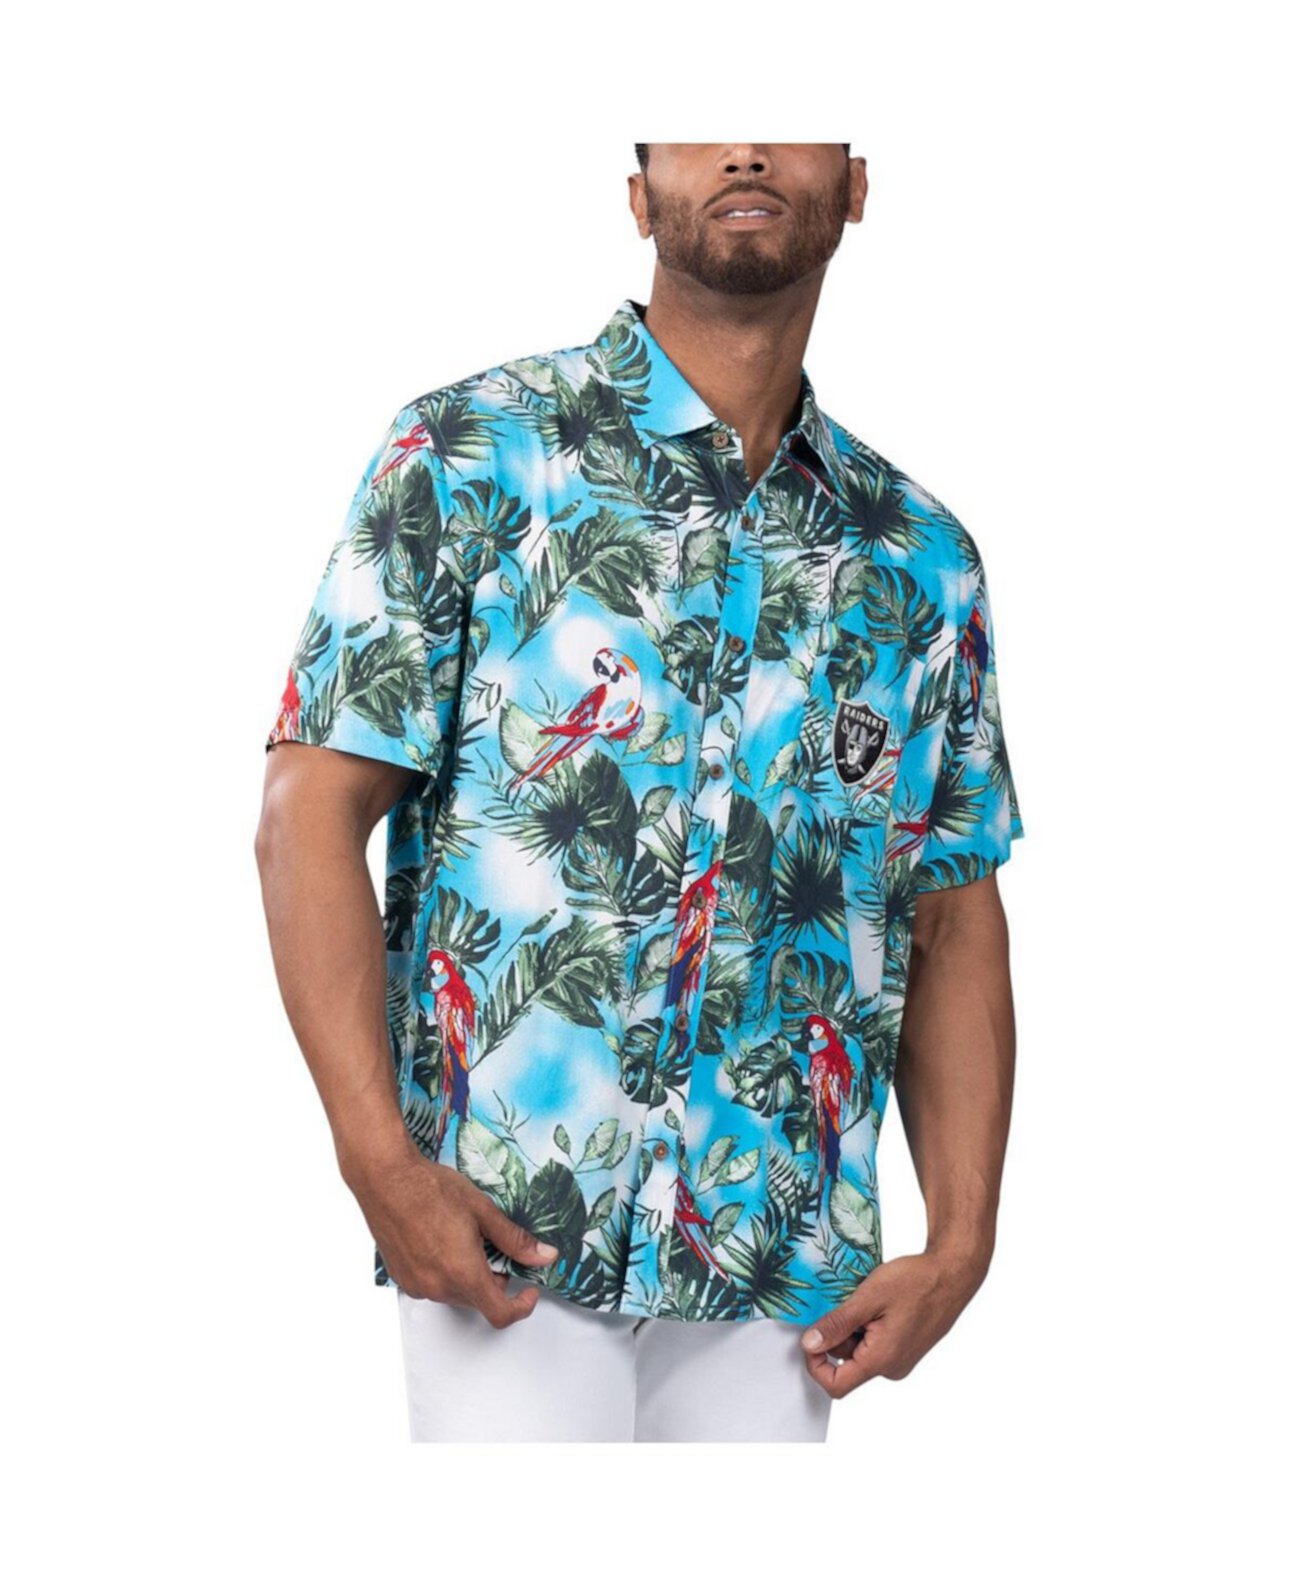 Мужская голубая рубашка на пуговицах Las Vegas Raiders Jungle Parrot Party Margaritaville